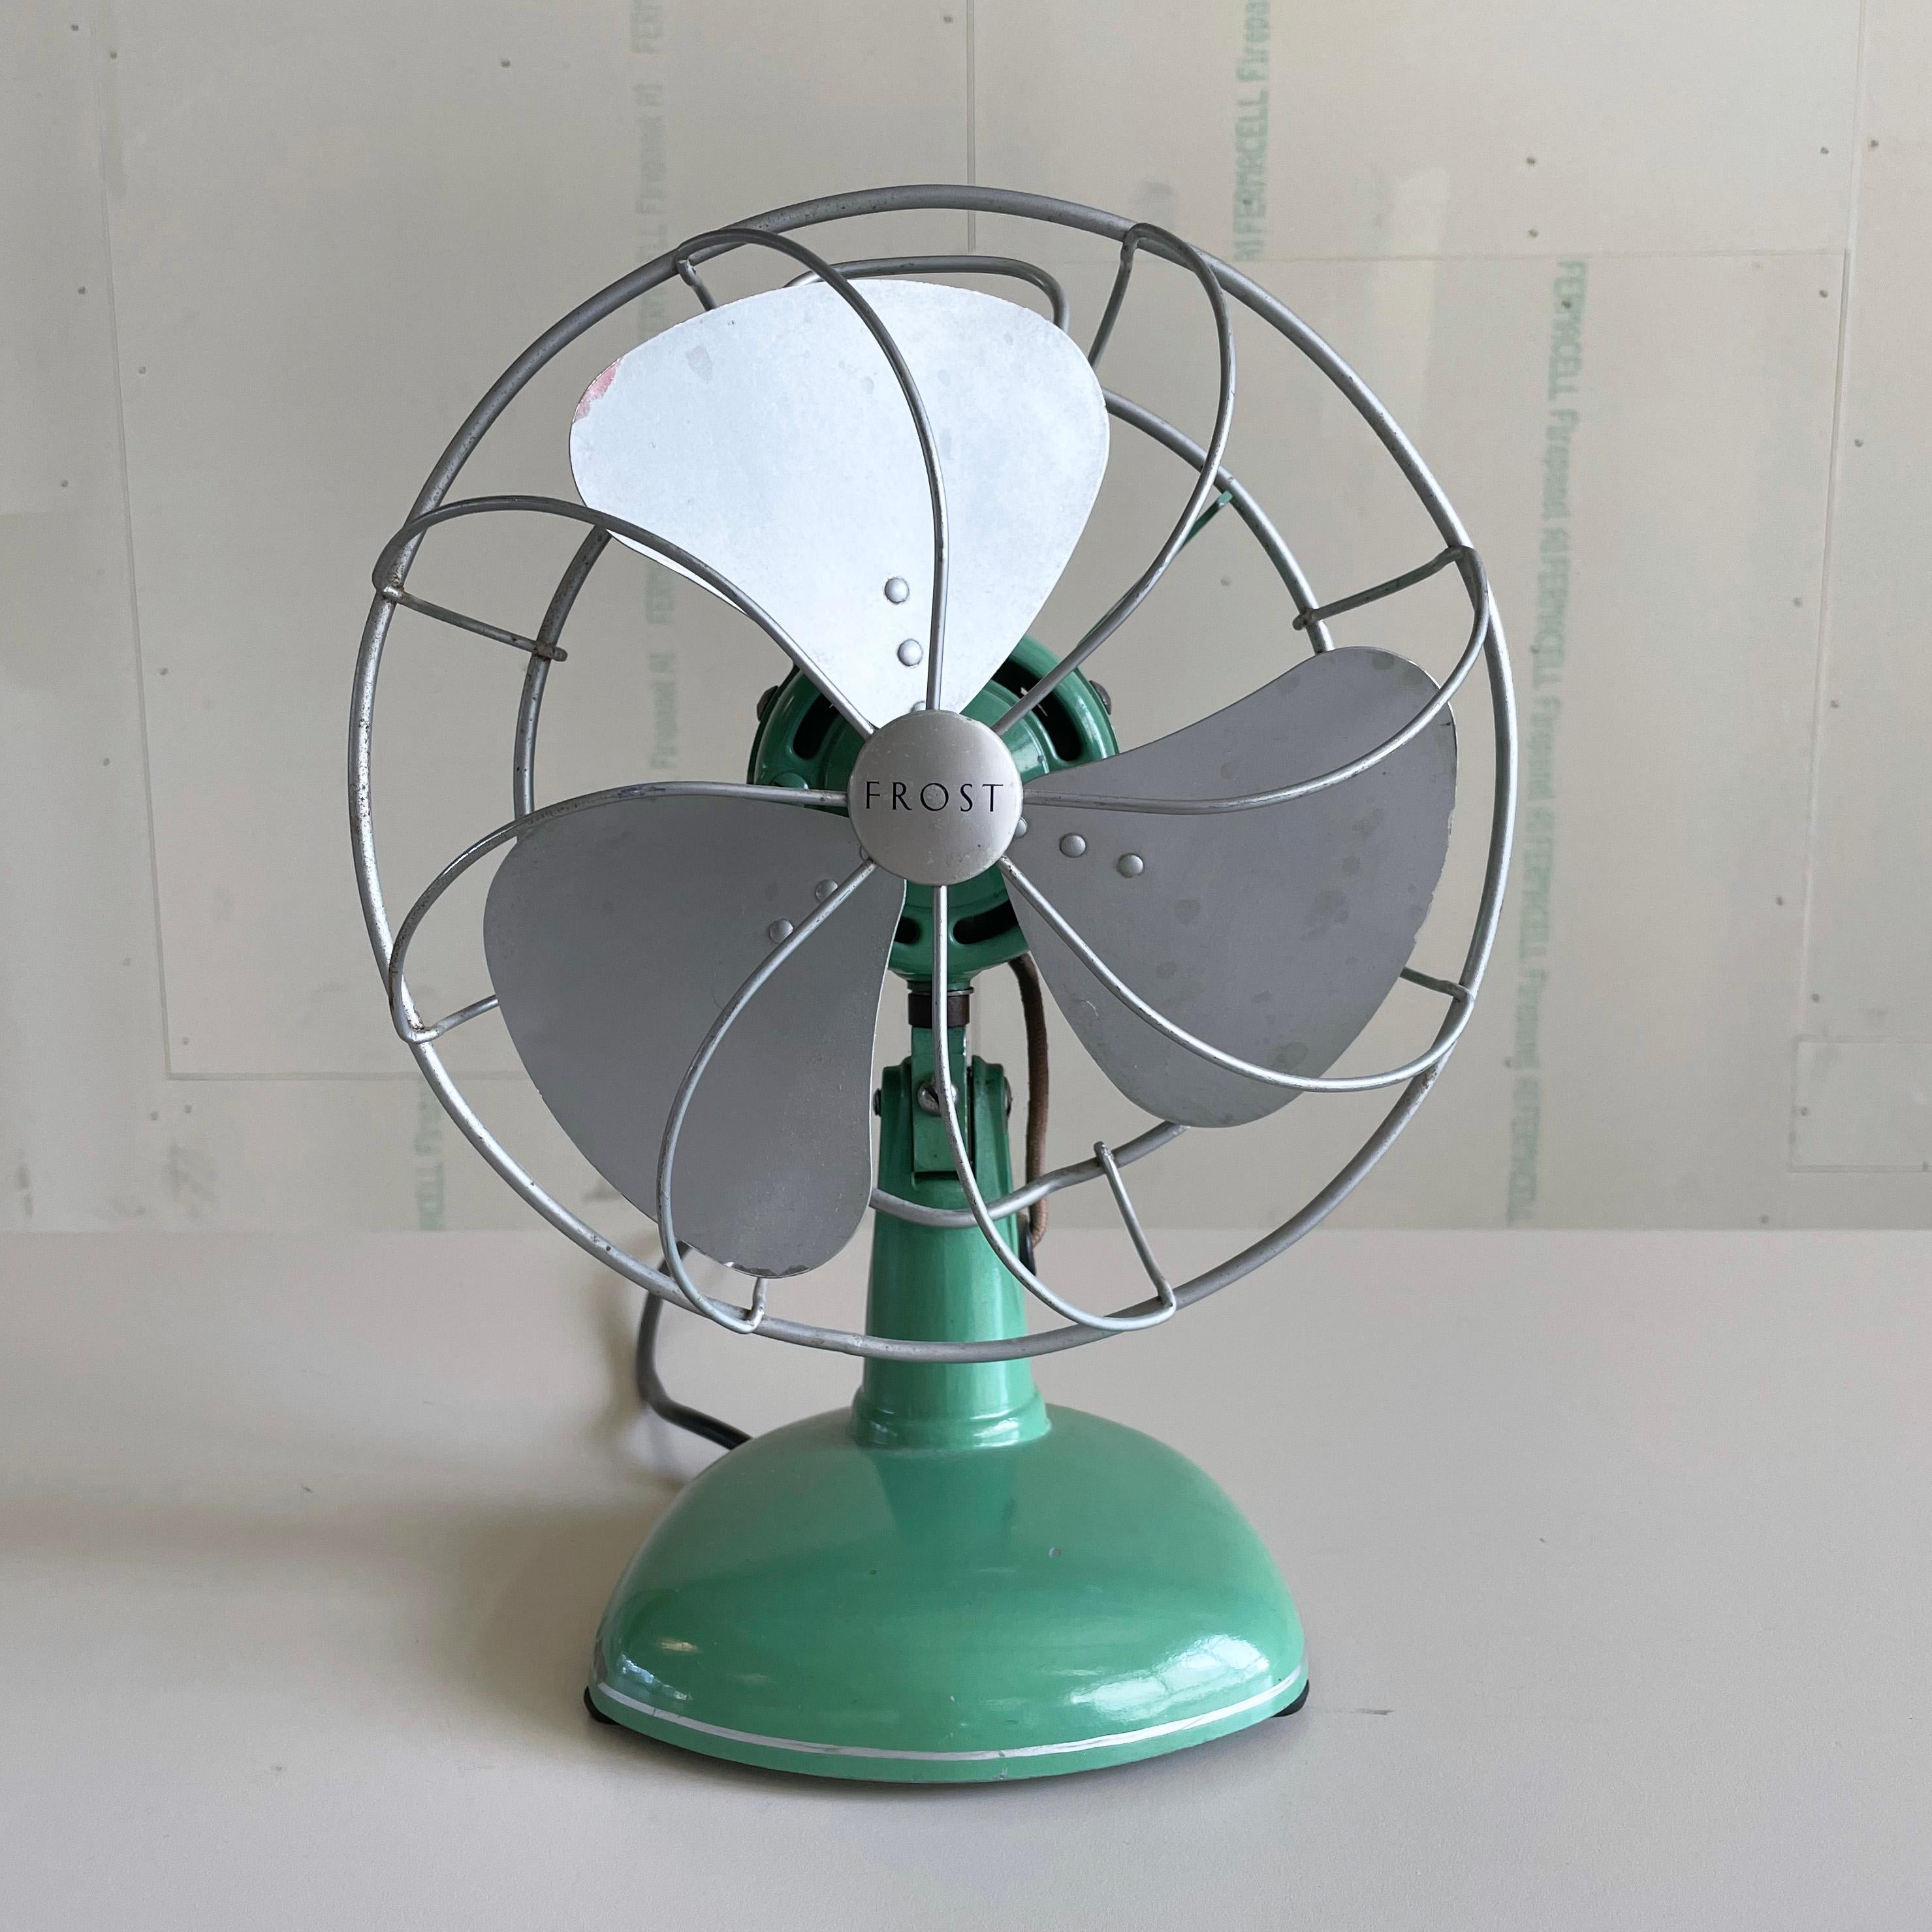 British 1950’s FROST triple blade oscillating desk fan / ventilator For Sale